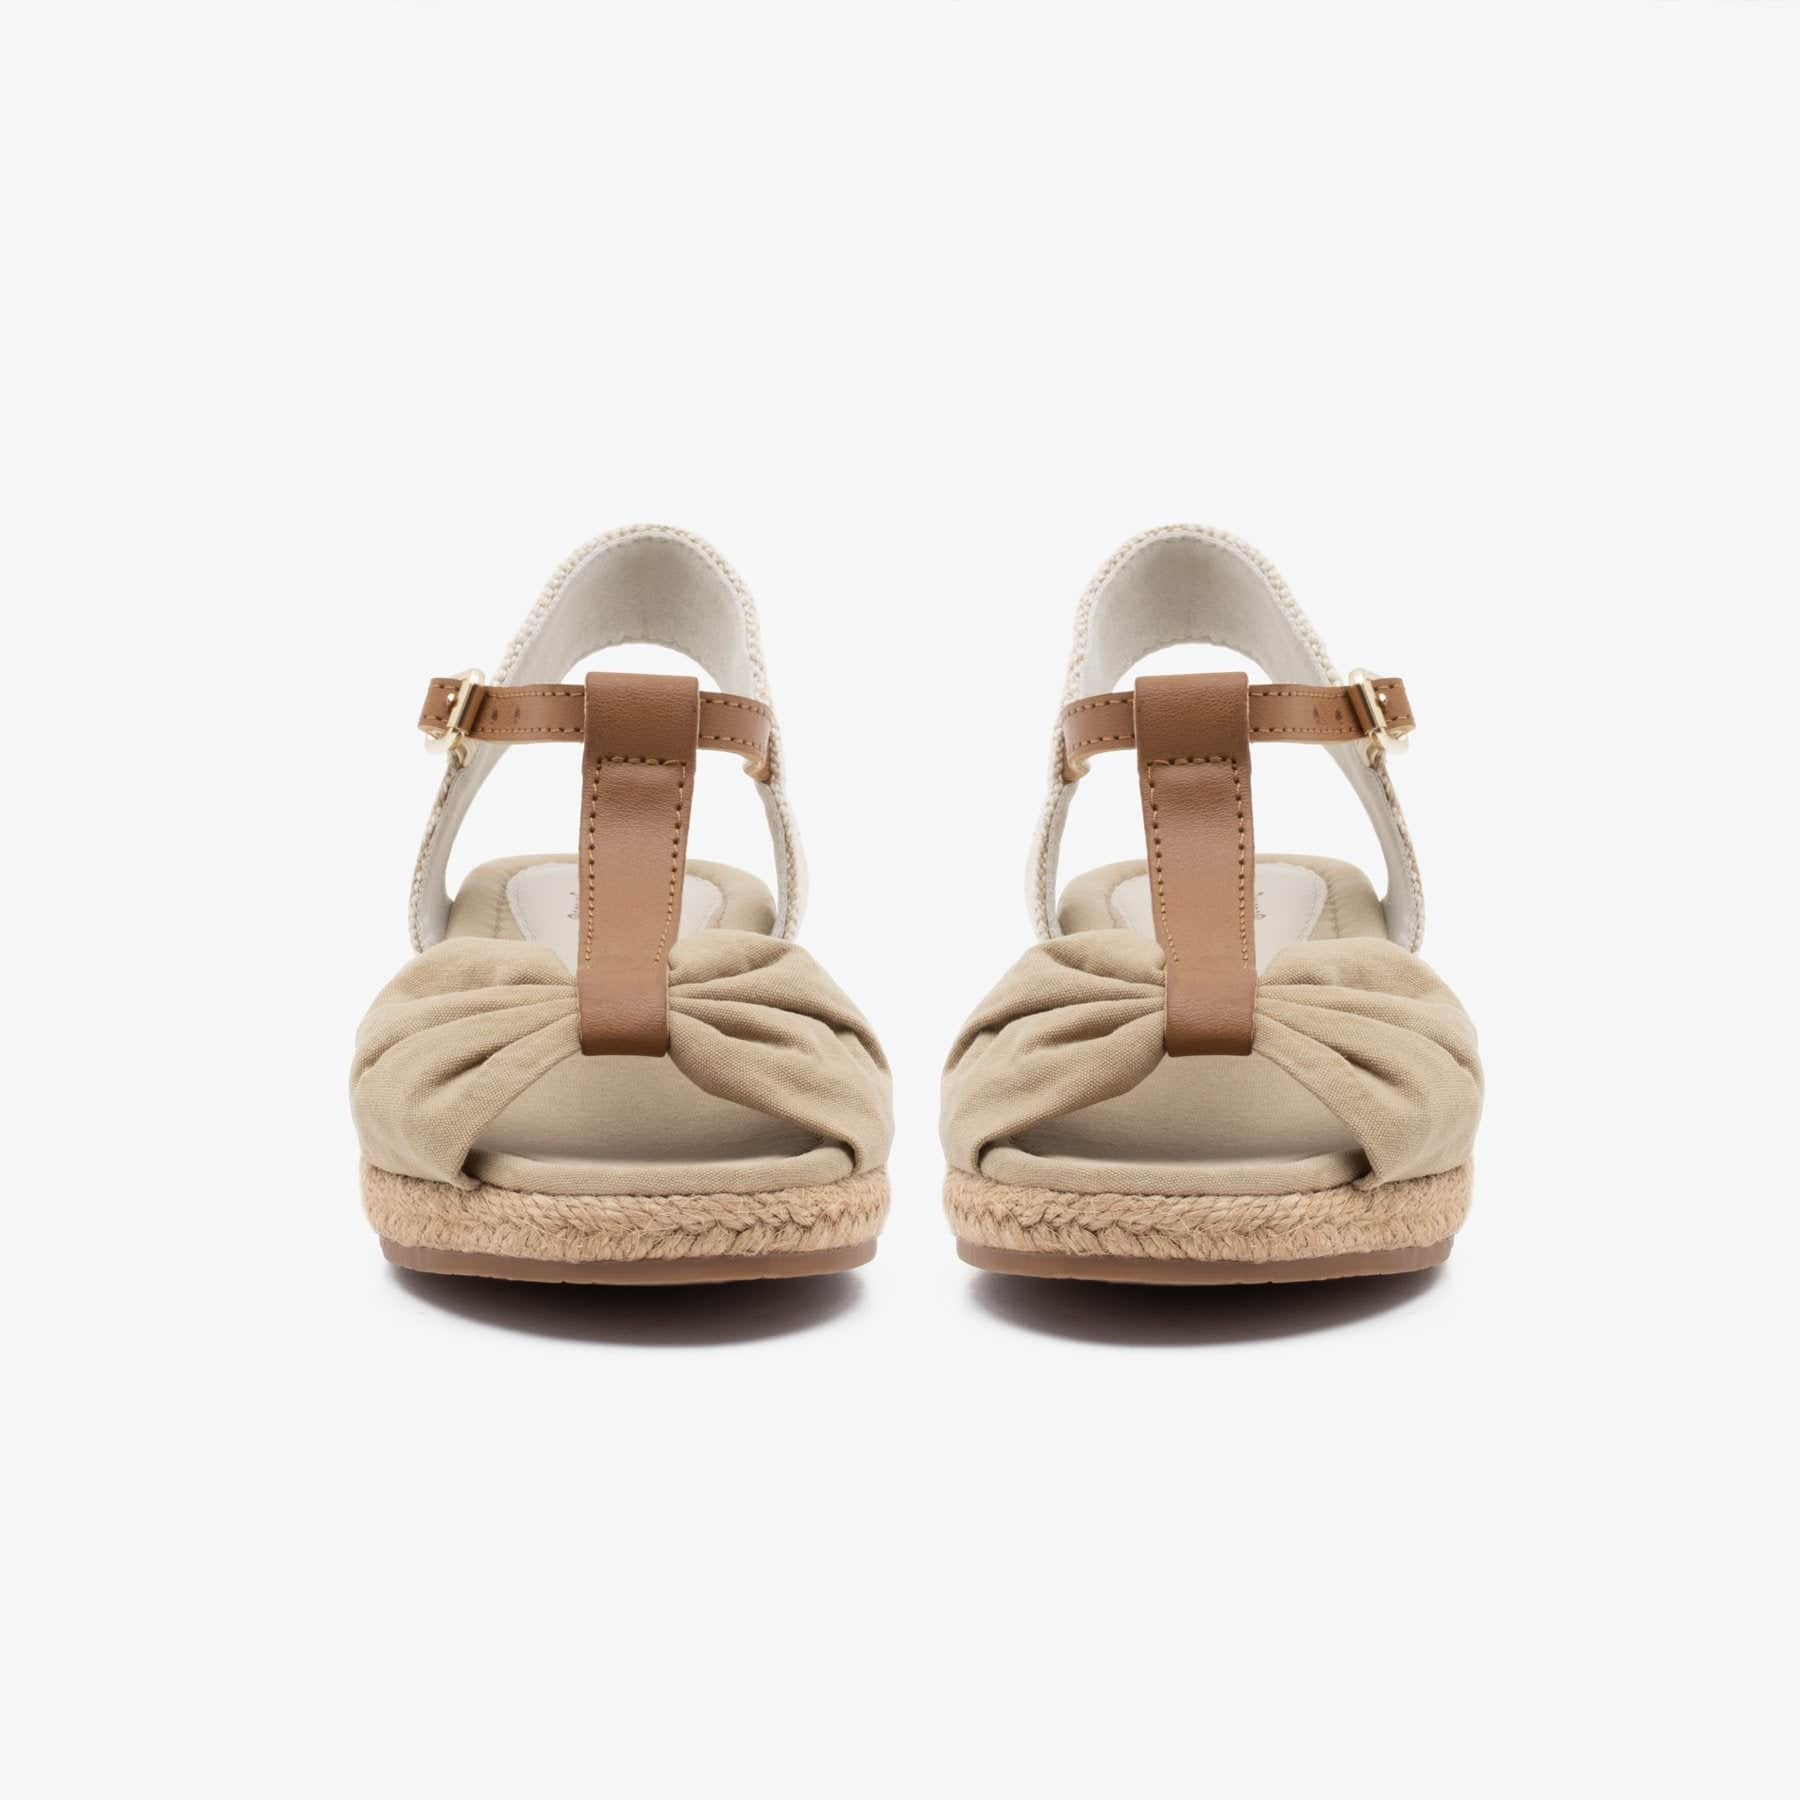 FRESAS CON NATA Shoes Girl's Beige Canvas Wedge Sandals